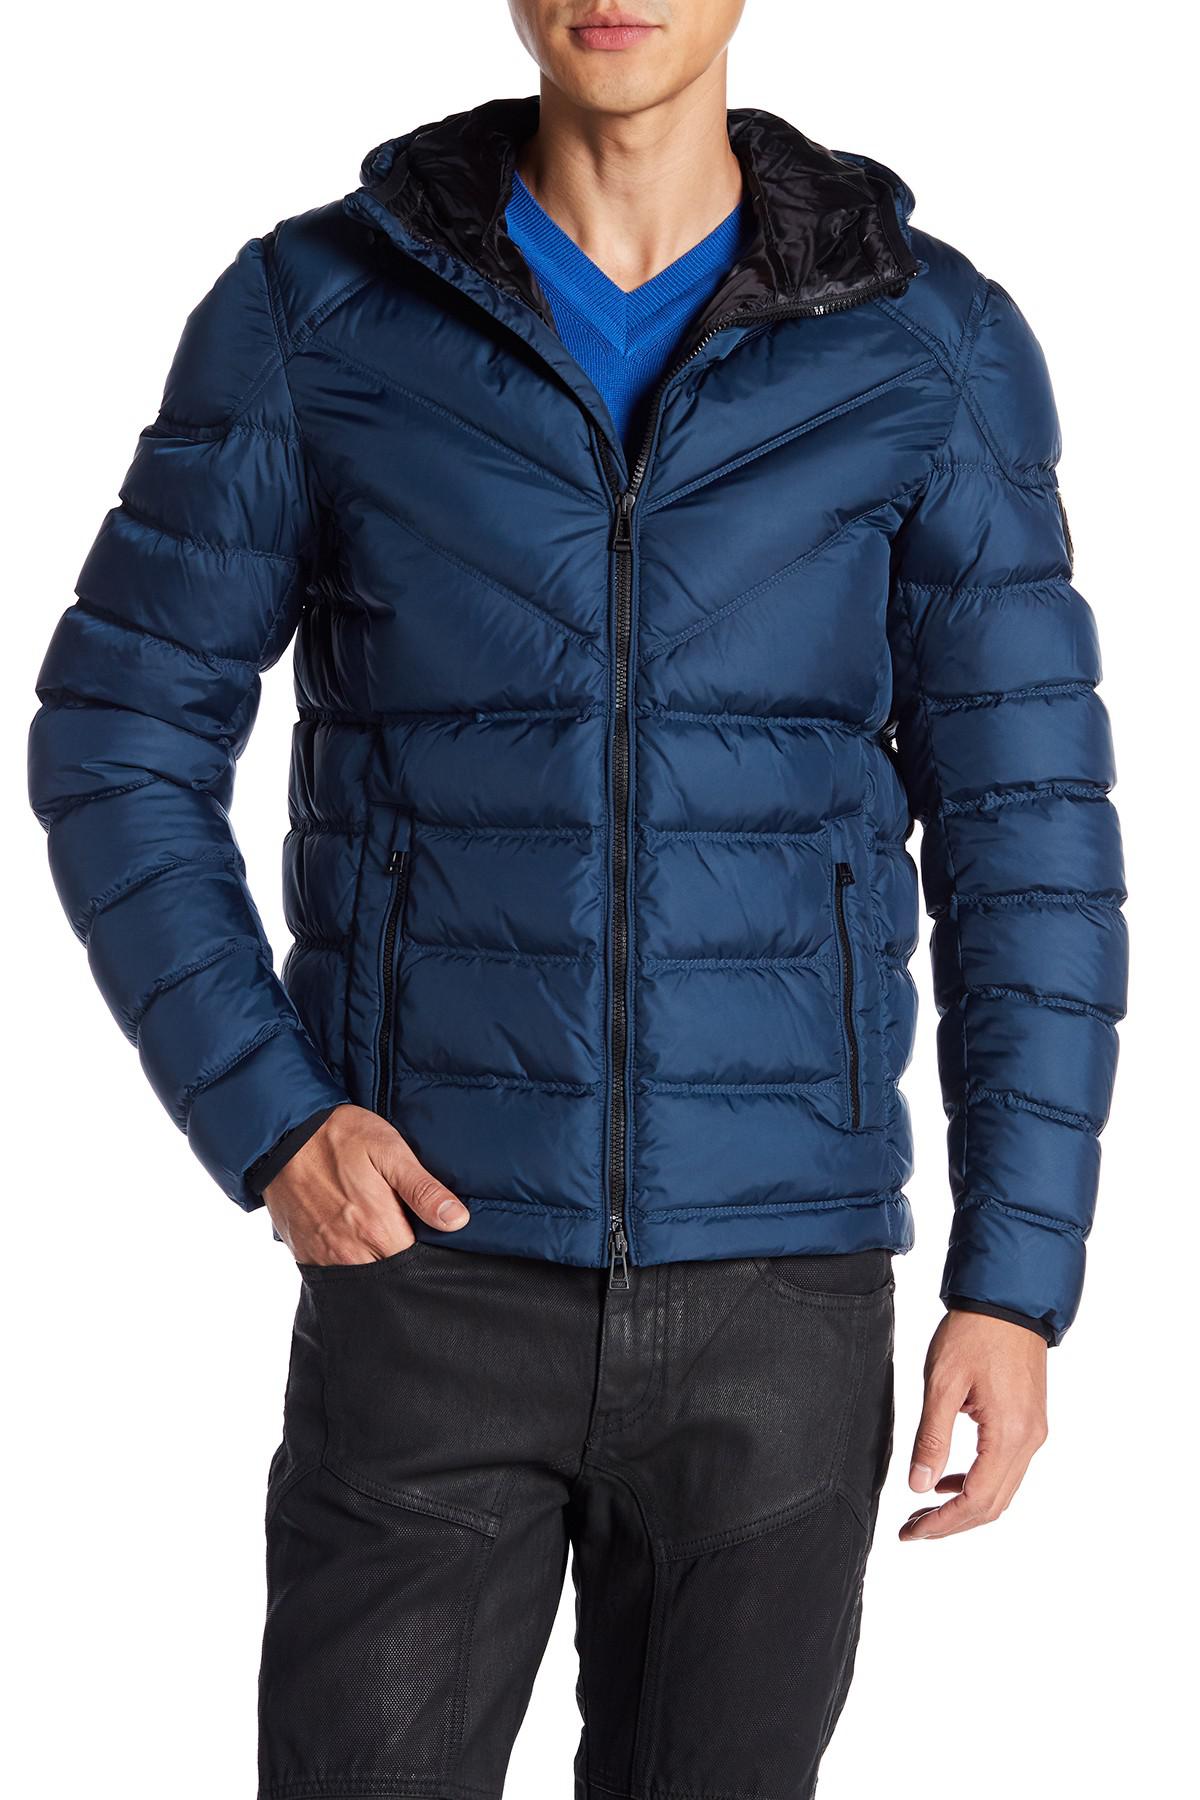 Lyst - Belstaff Glenwood Quilted Puff Jacket in Blue for Men